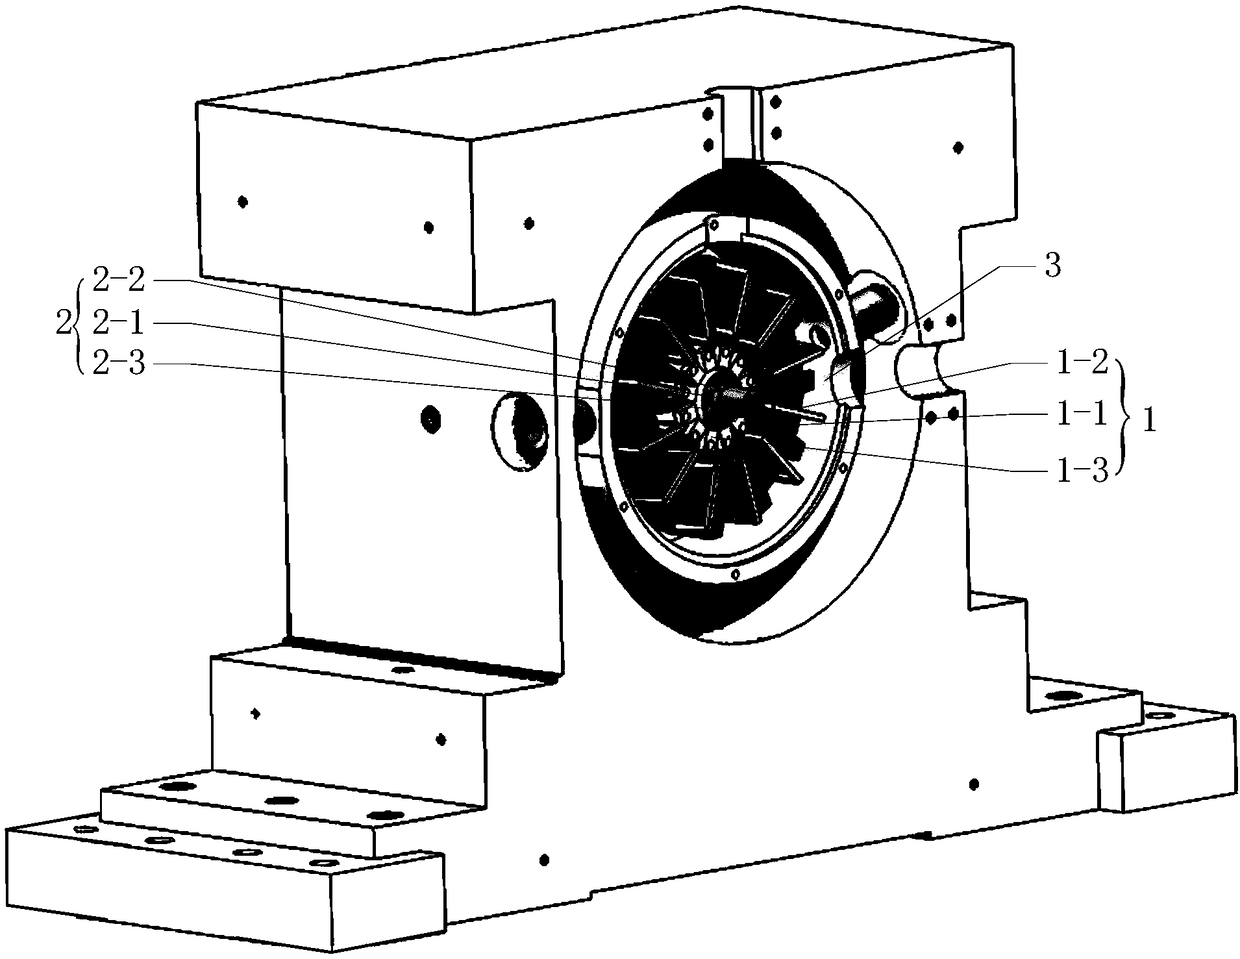 An air-bearing rotor bearingless motor with slot wedge ventilation